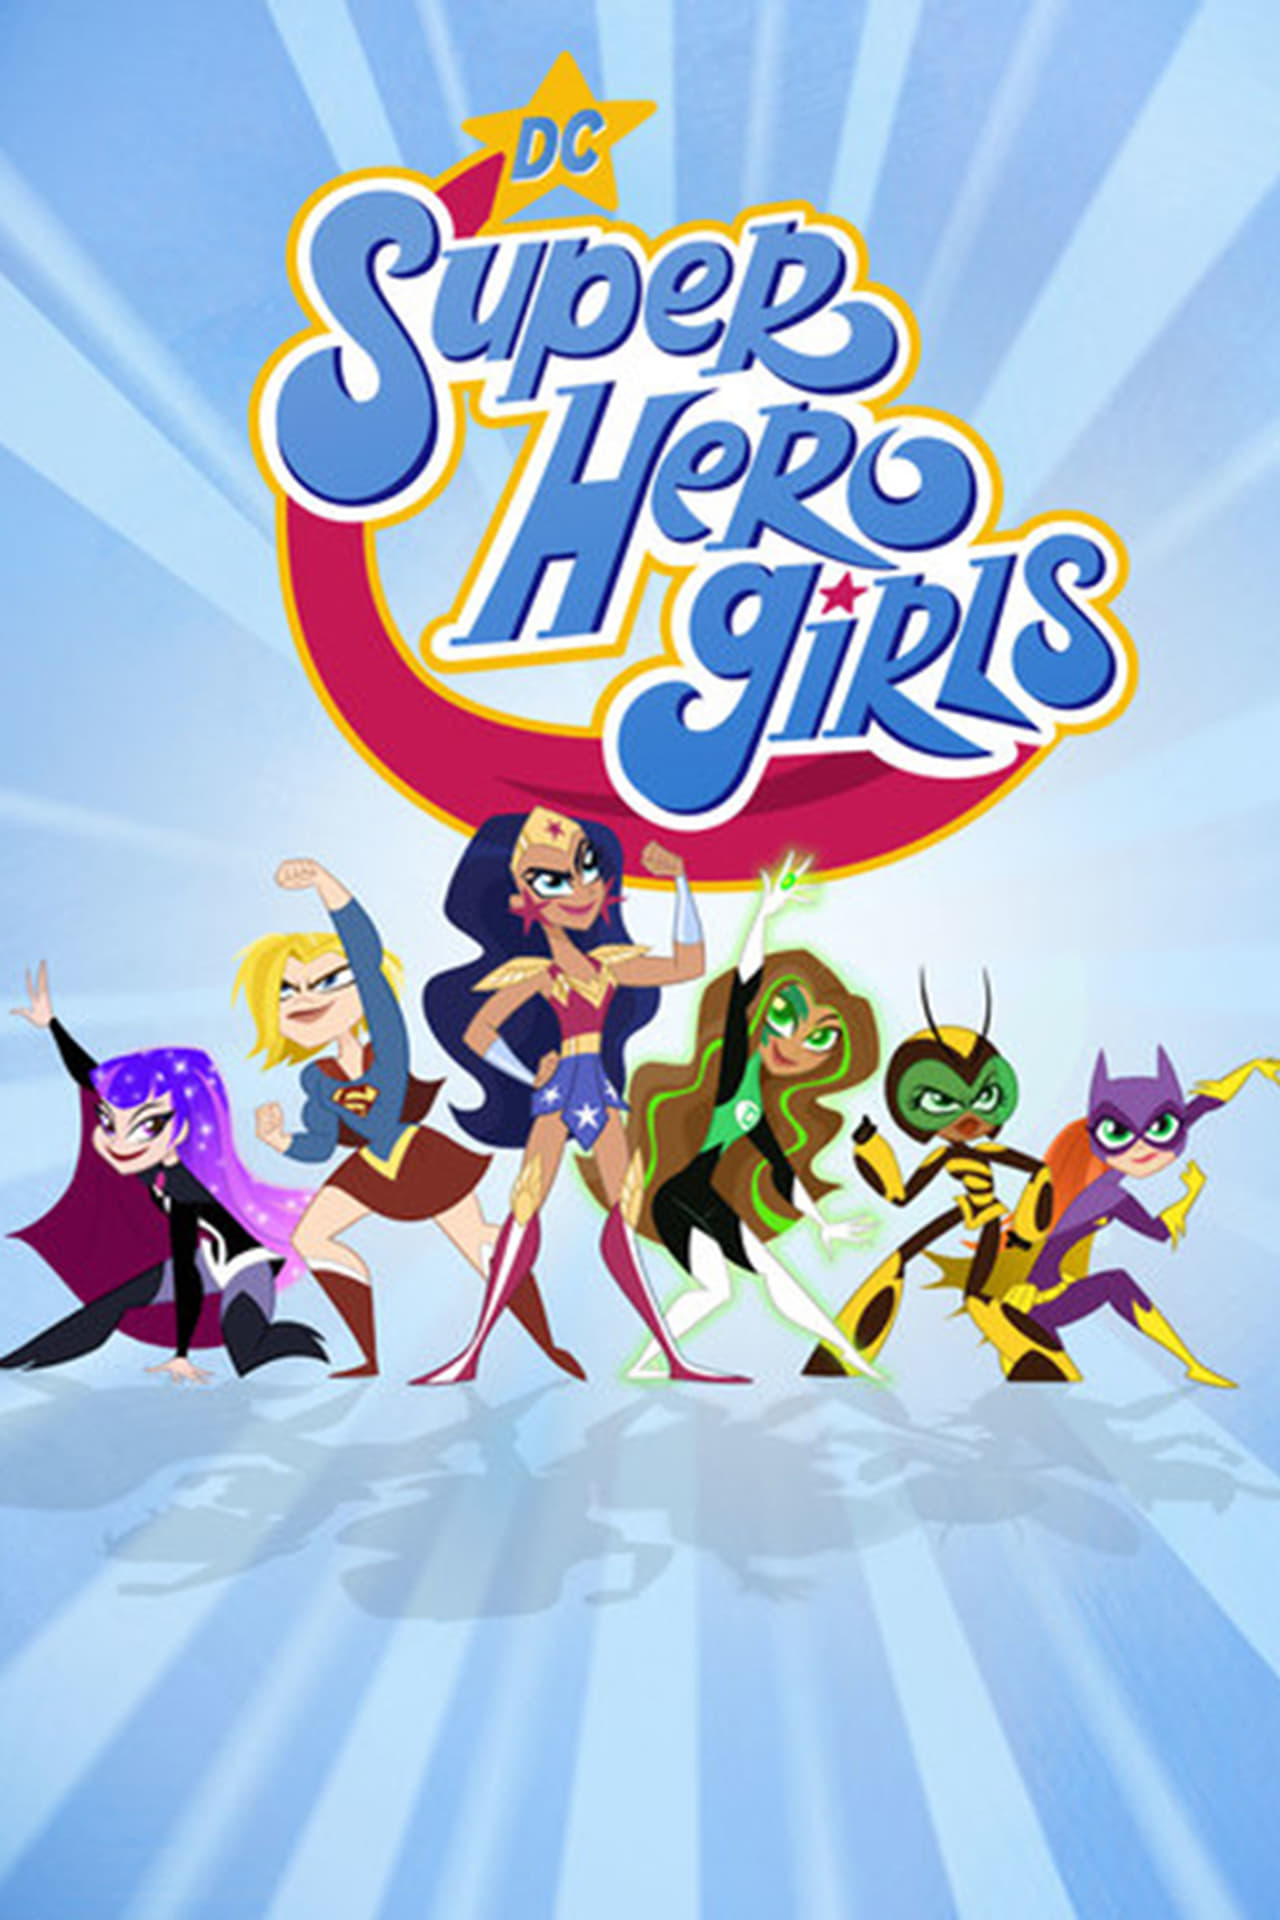 DC Super Hero Girls (season 2)